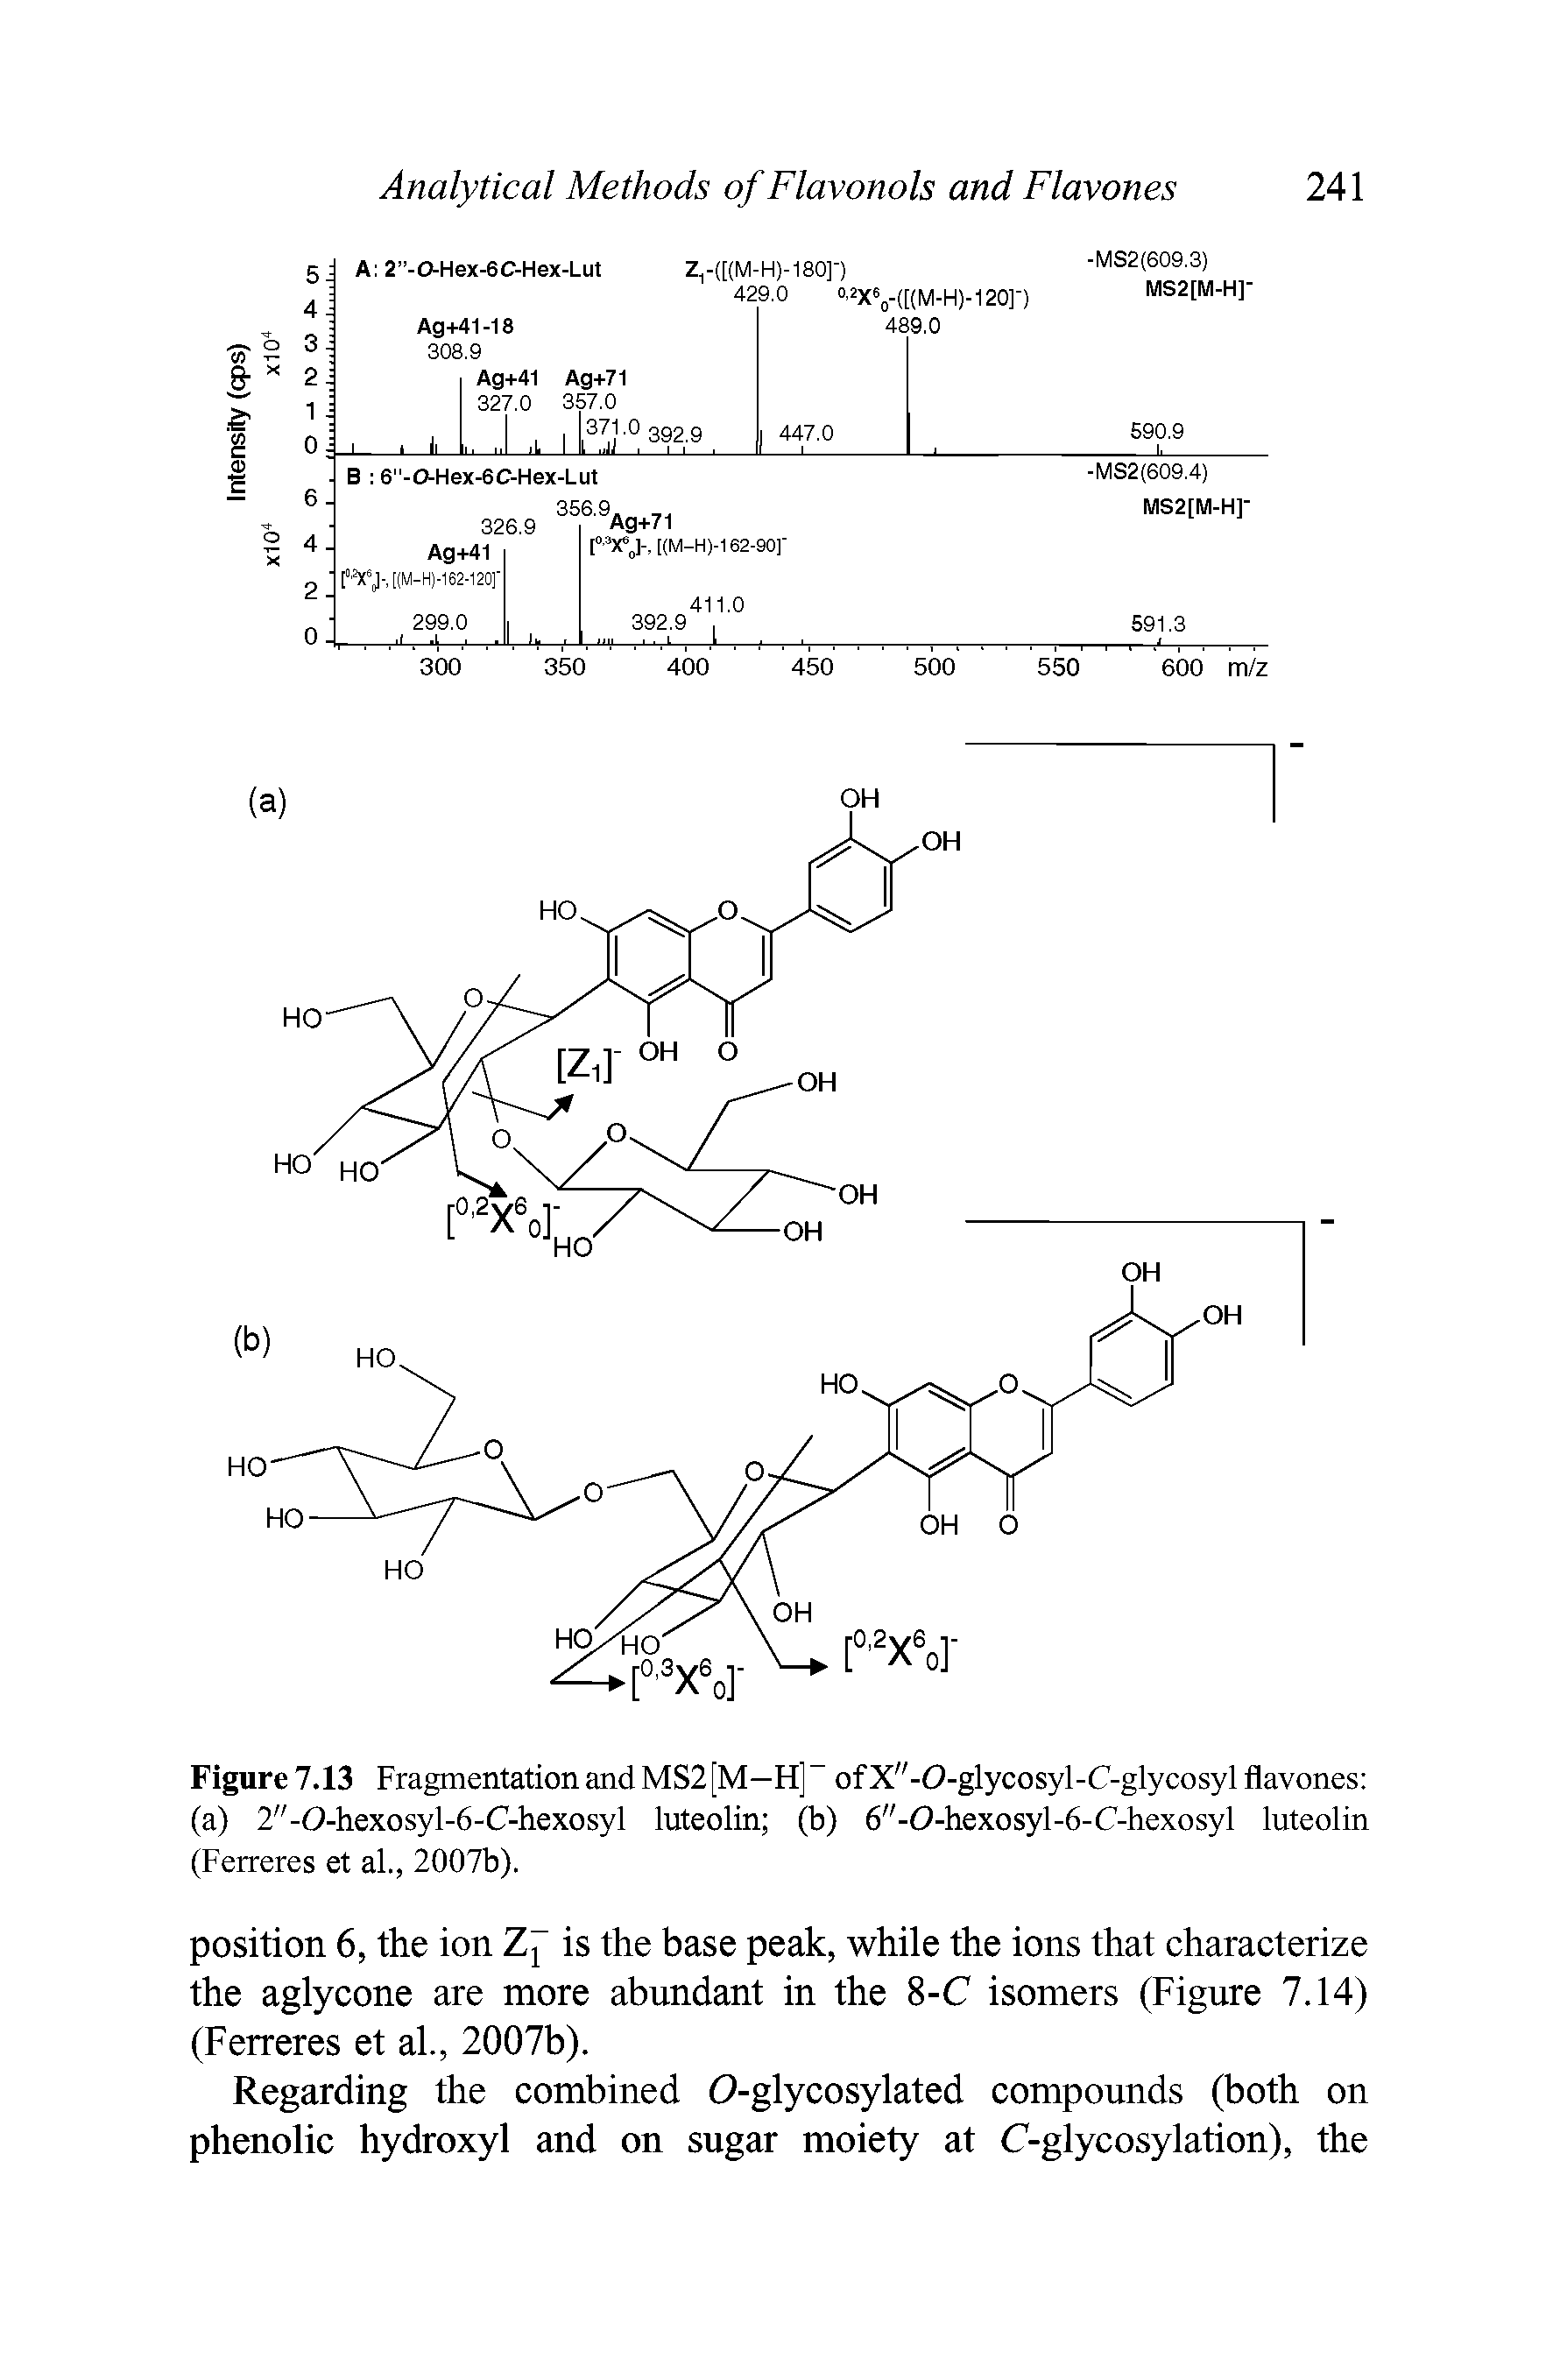 Figure 7.13 Fragmentation and MS2 [M—H] of X"-0-glycosyl-C-glycosyl flavones (a) 2"-0-hexosyl-6-C-hexosyl luteolin (b) 6"-0-hexosyl-6-C-hexosyl luteolin (Ferreres et al., 2007b).